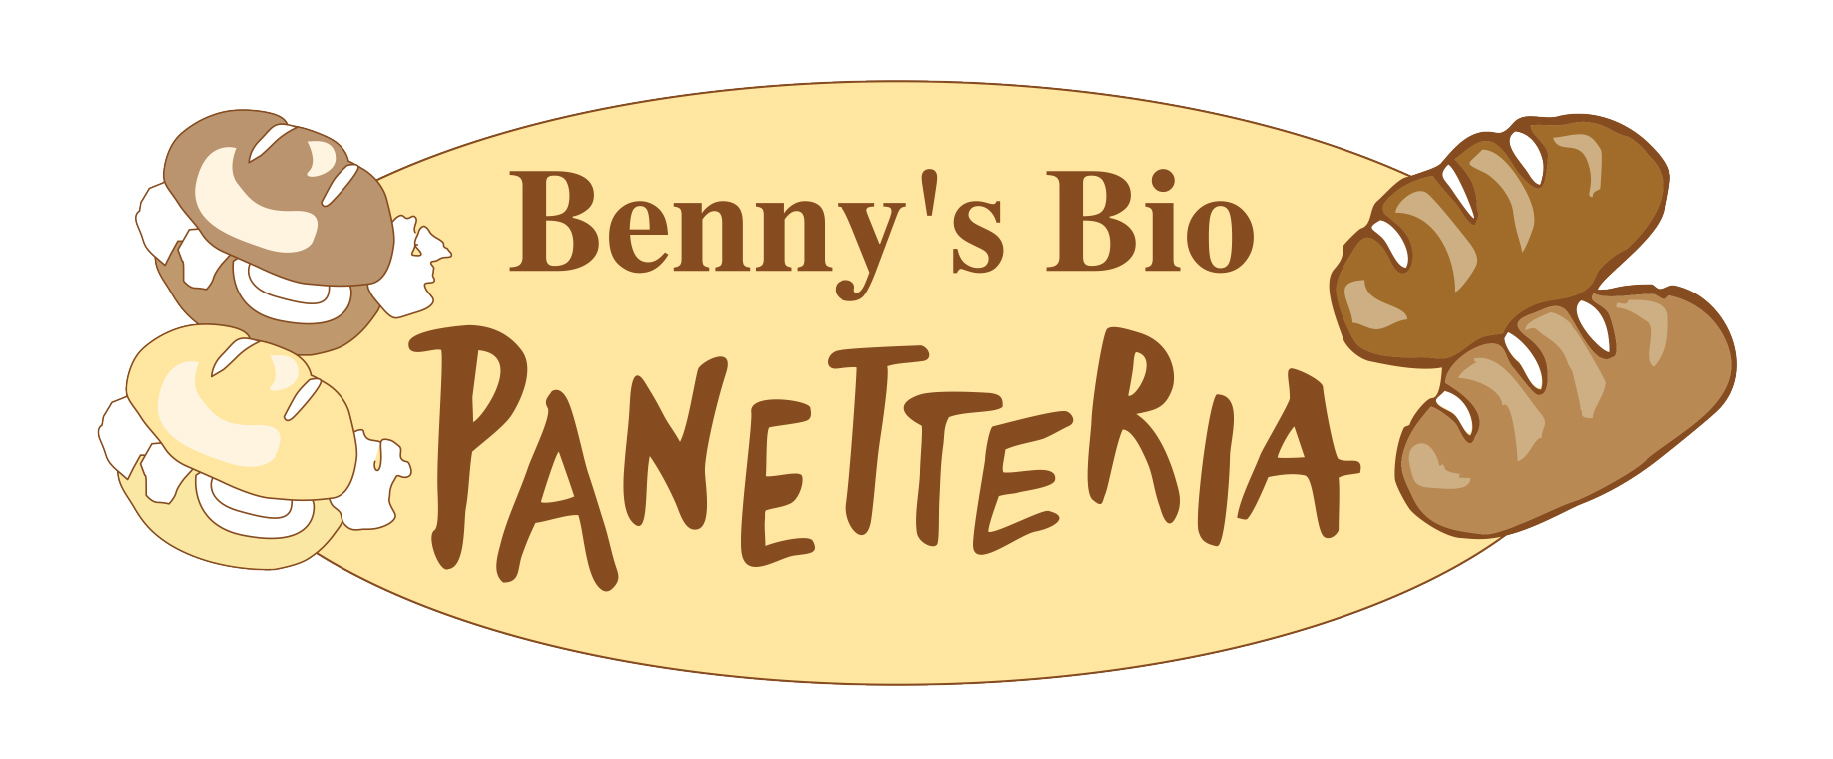 Benny's Bio Panetteria